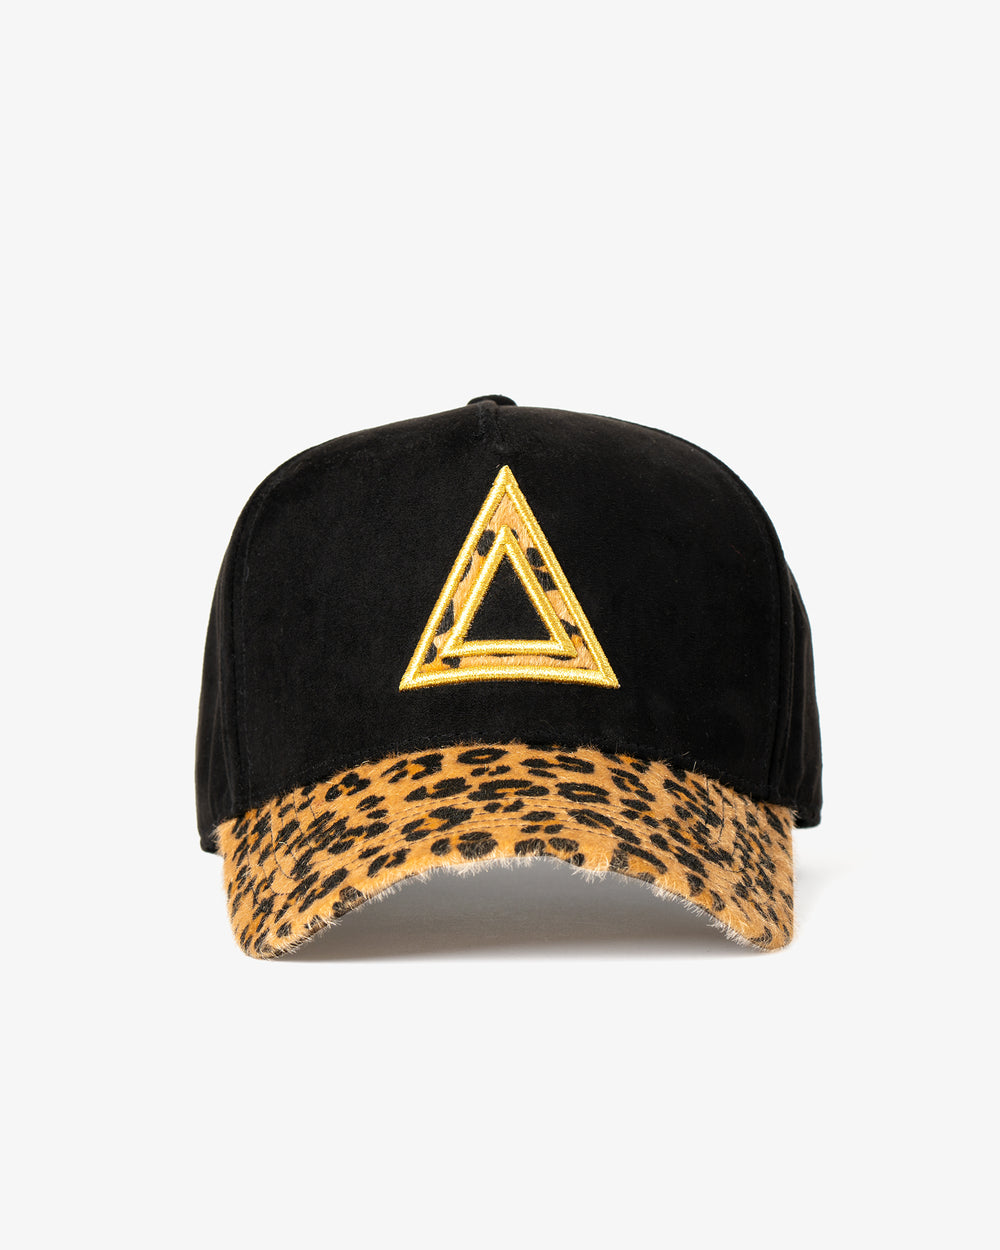 TRI Cheetah Hat - LUX Mixed Texture